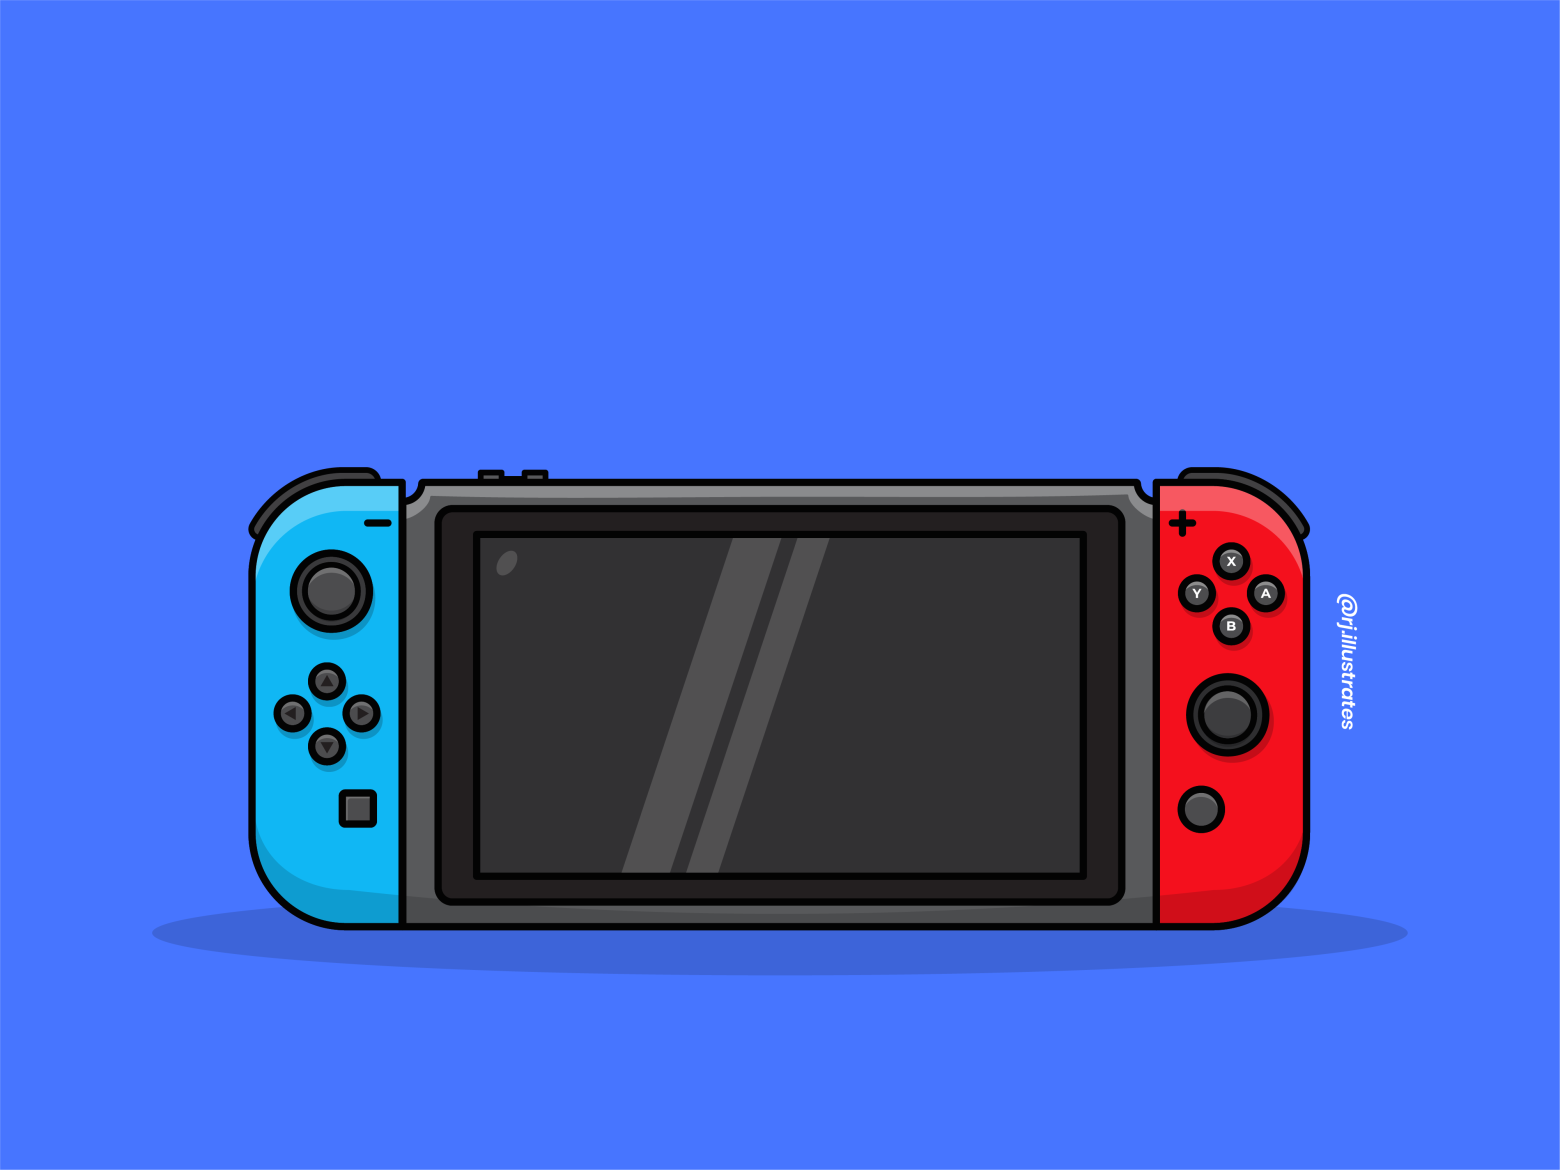 kubiske Samme Beroligende middel Nintendo switch illustration by Ronak Jadhavrao on Dribbble